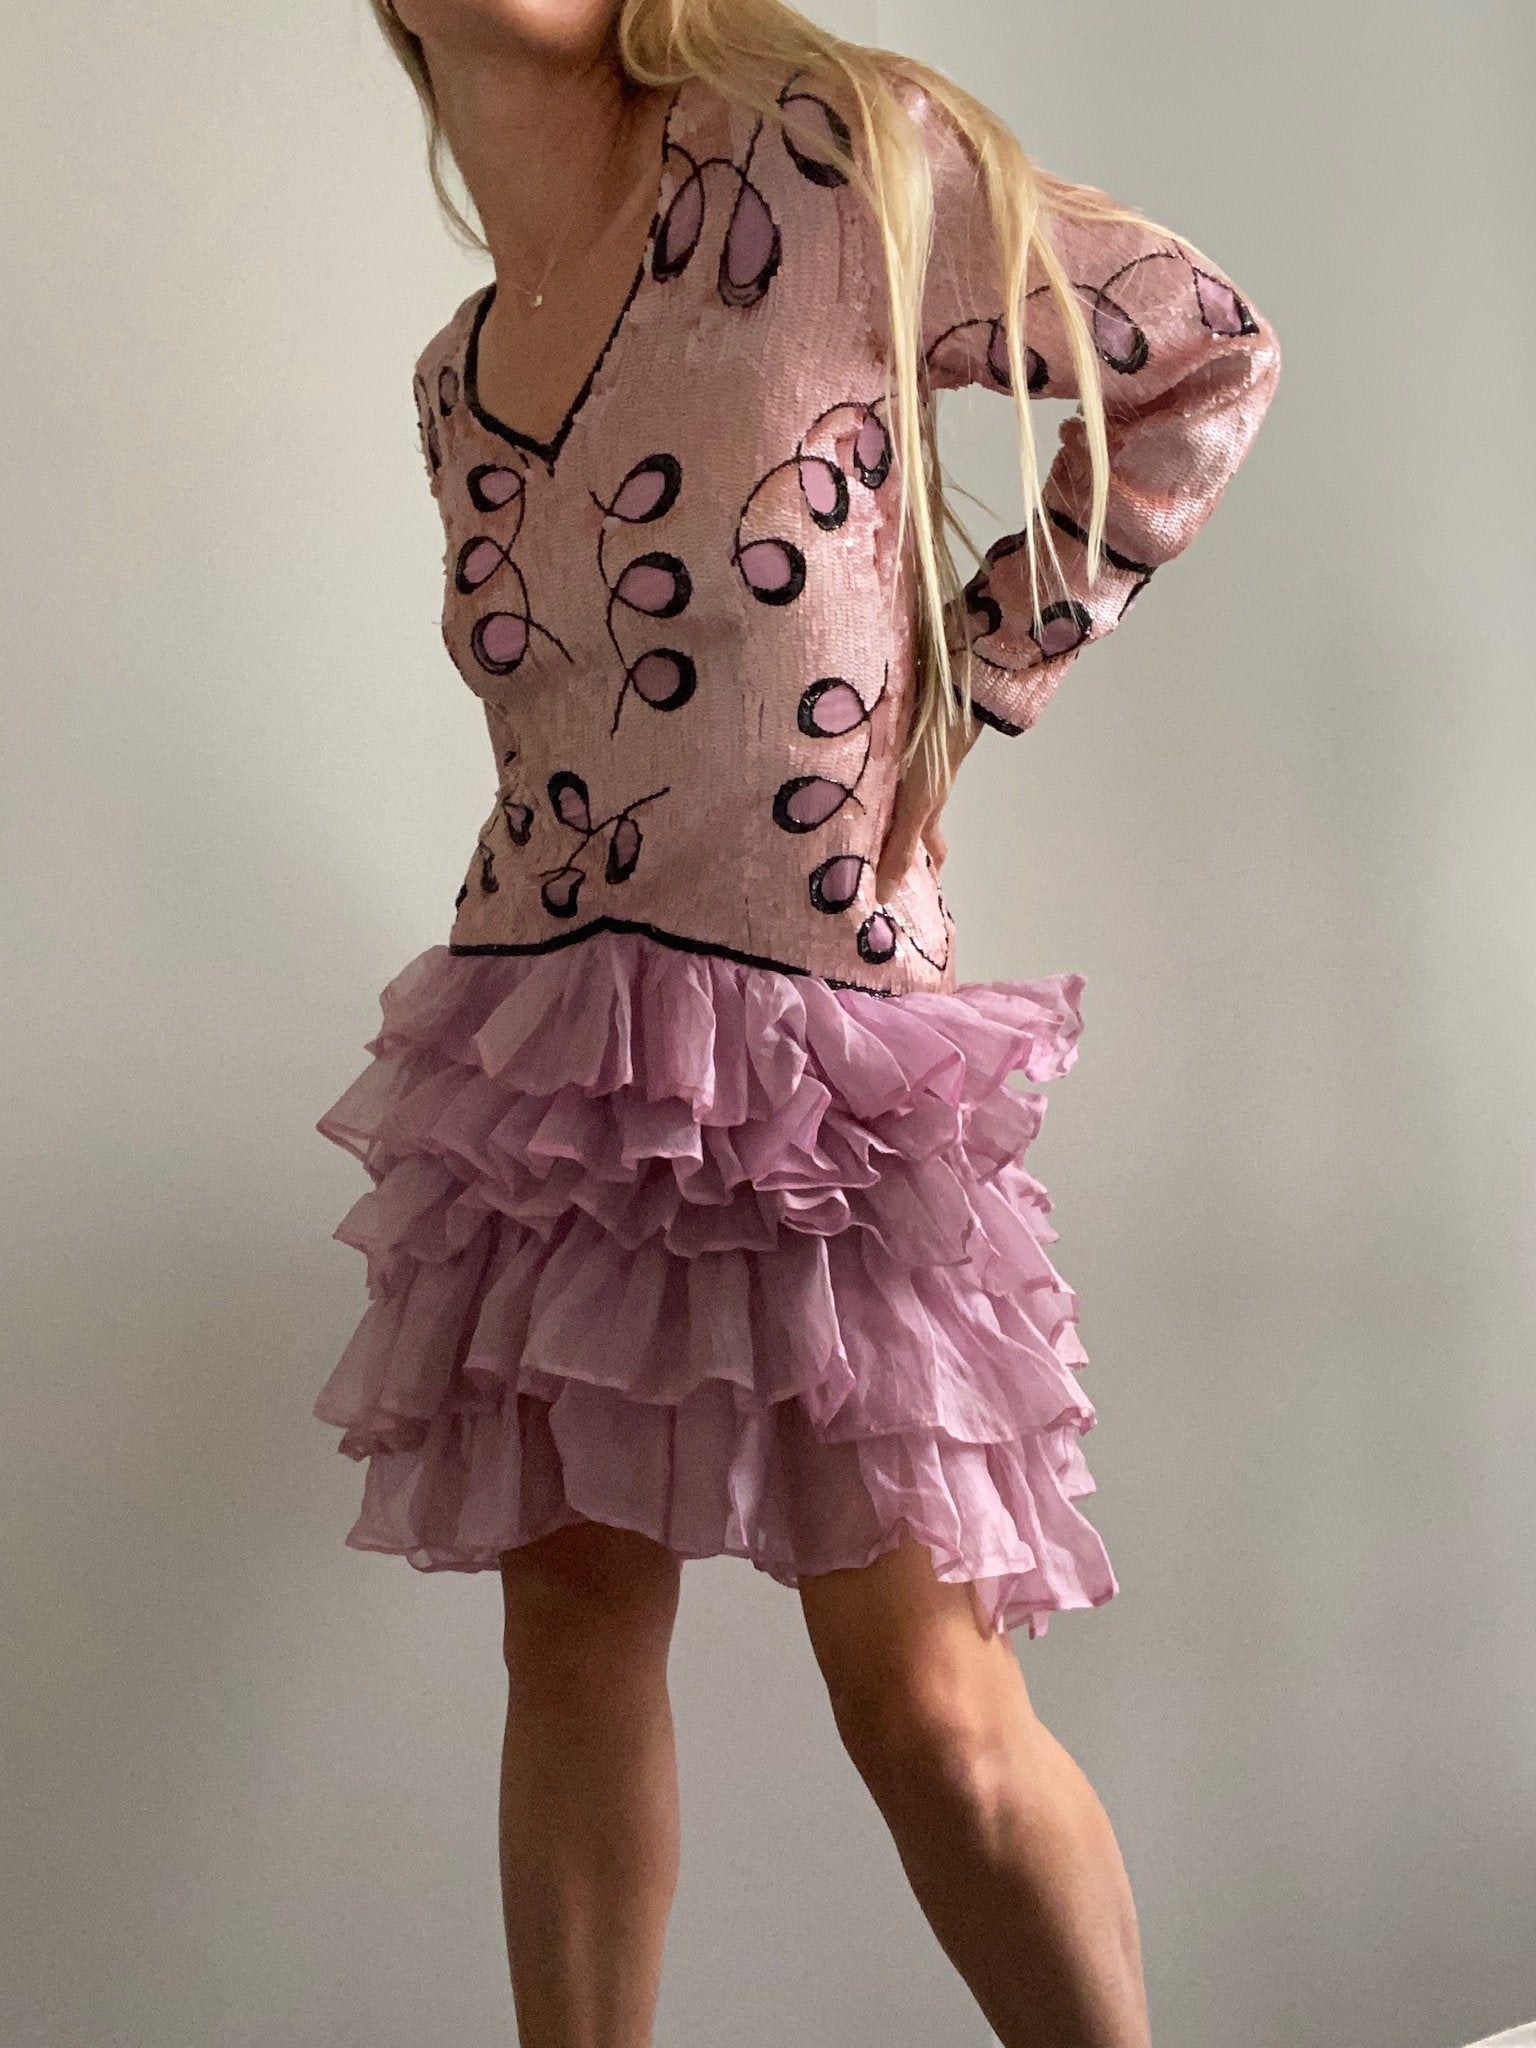 Jetsetbohemian Dresses Small Vintage Dolly Parton Dress